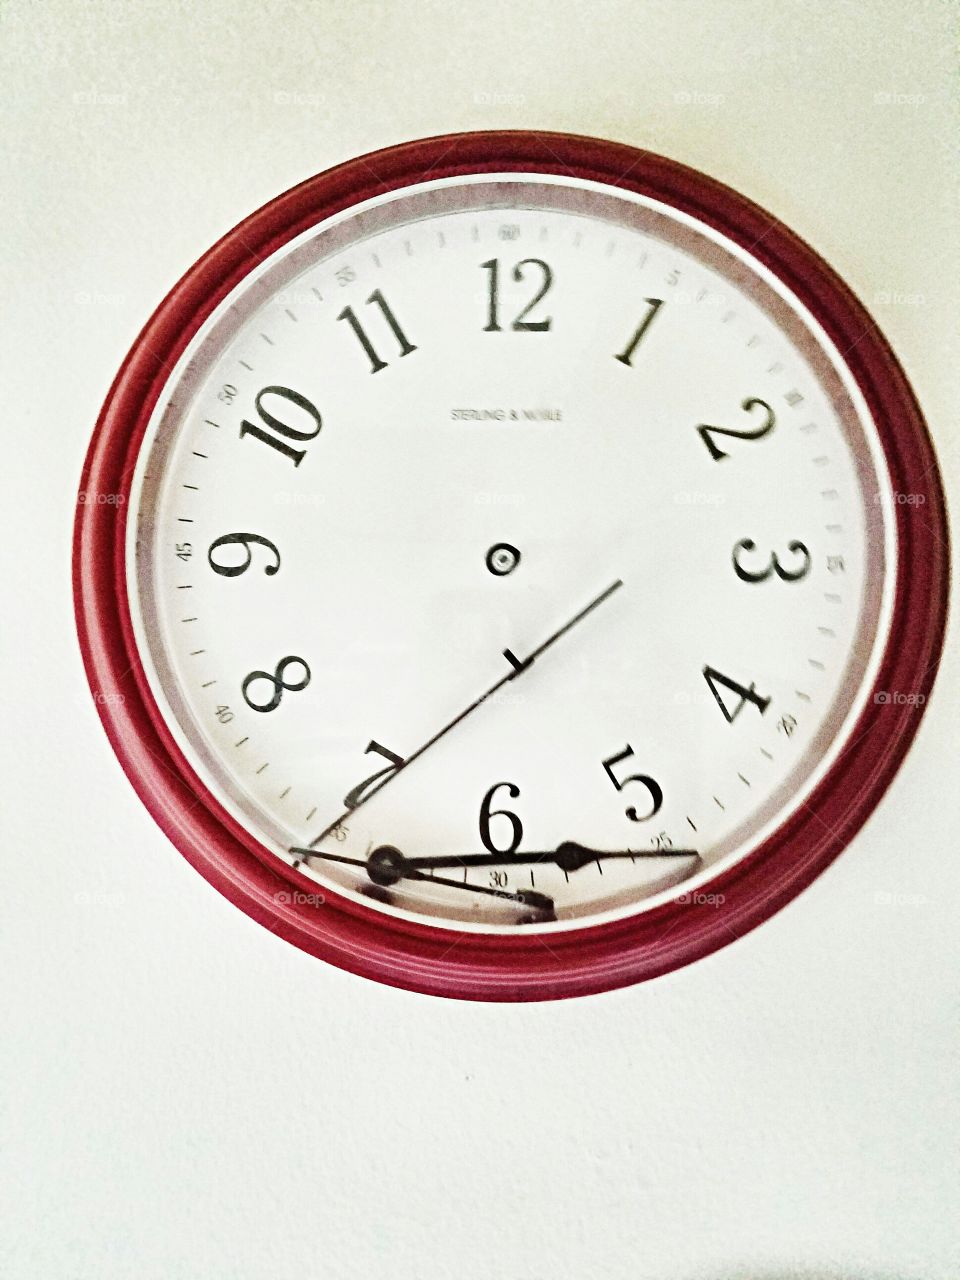 Broken Clock